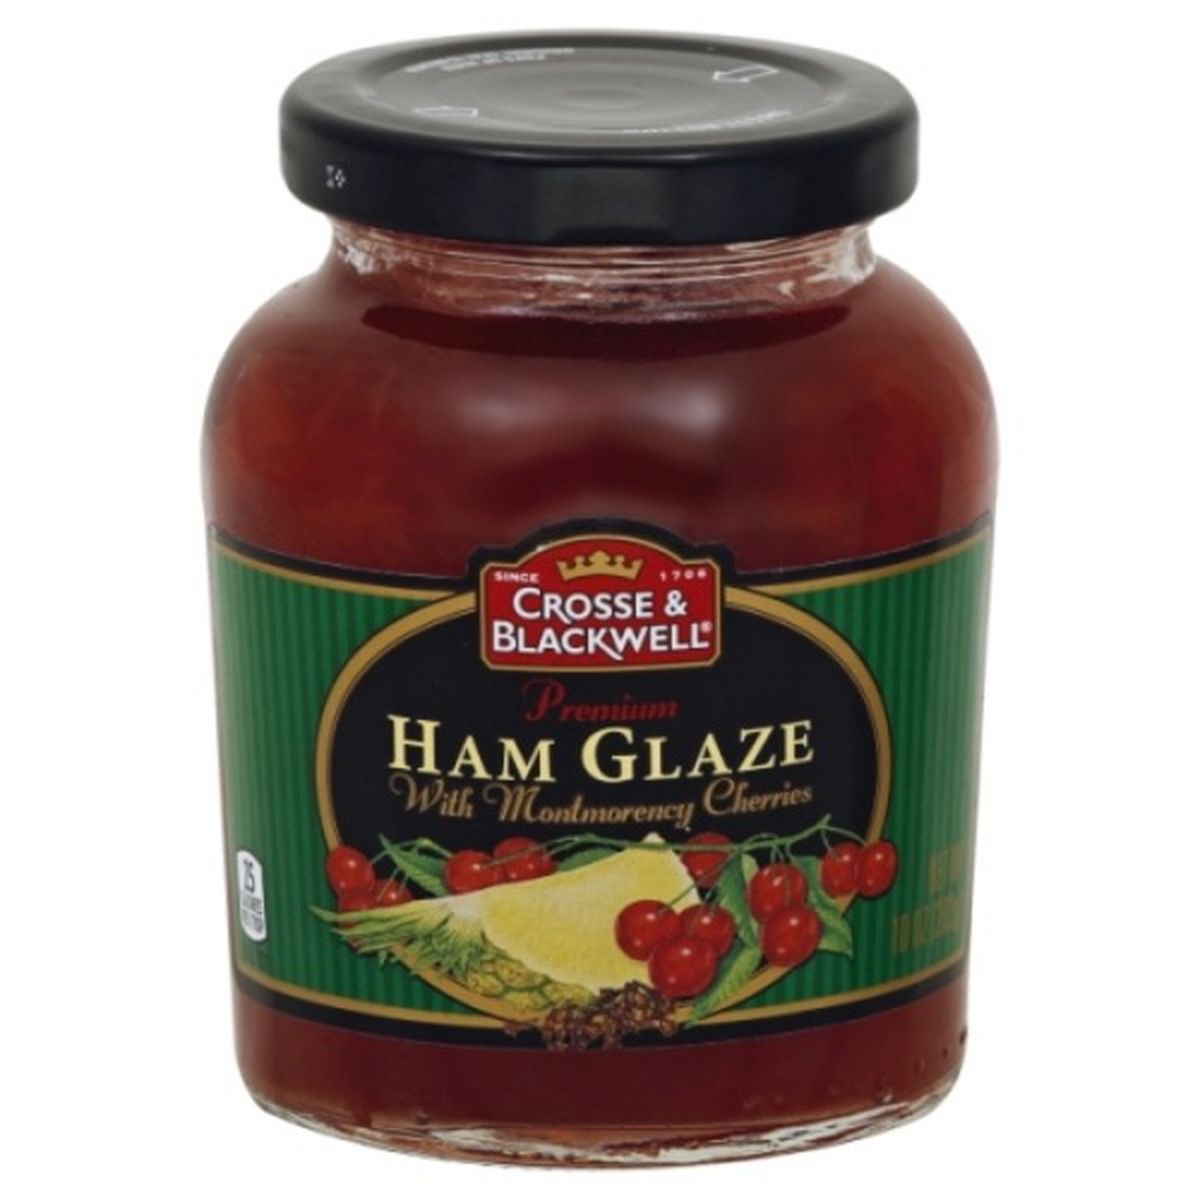 Calories in Crosse & Blackwell Ham Glaze, Premium, with Montmorency Cherries,